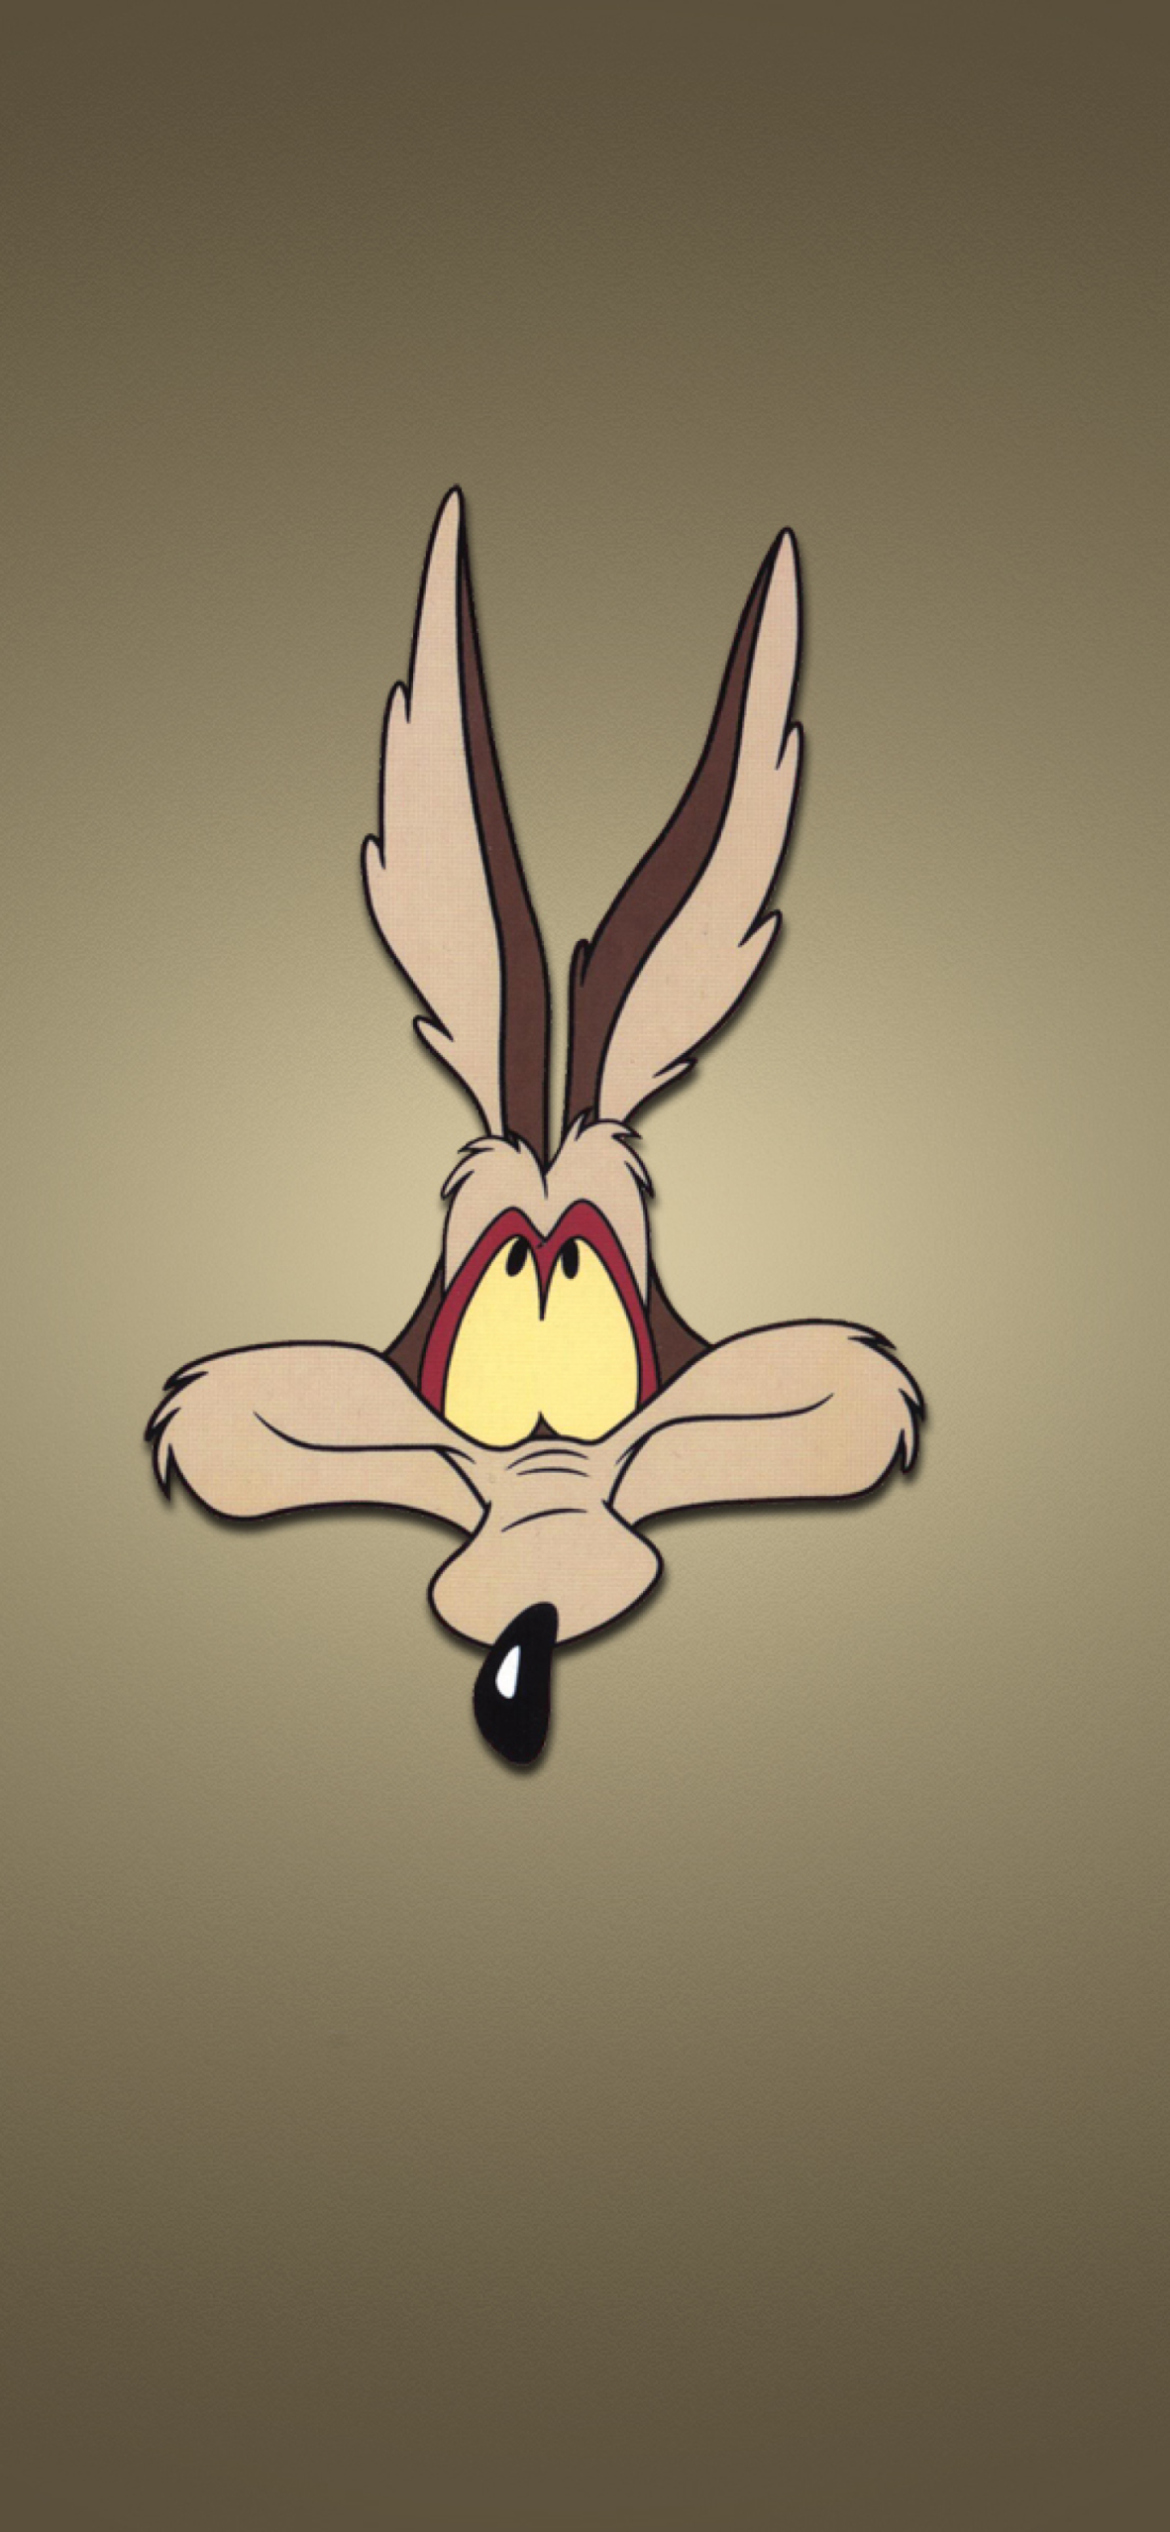 Looney Tunes Wile E. Coyote - Fondos de pantalla gratis para iPhone 12 Pro